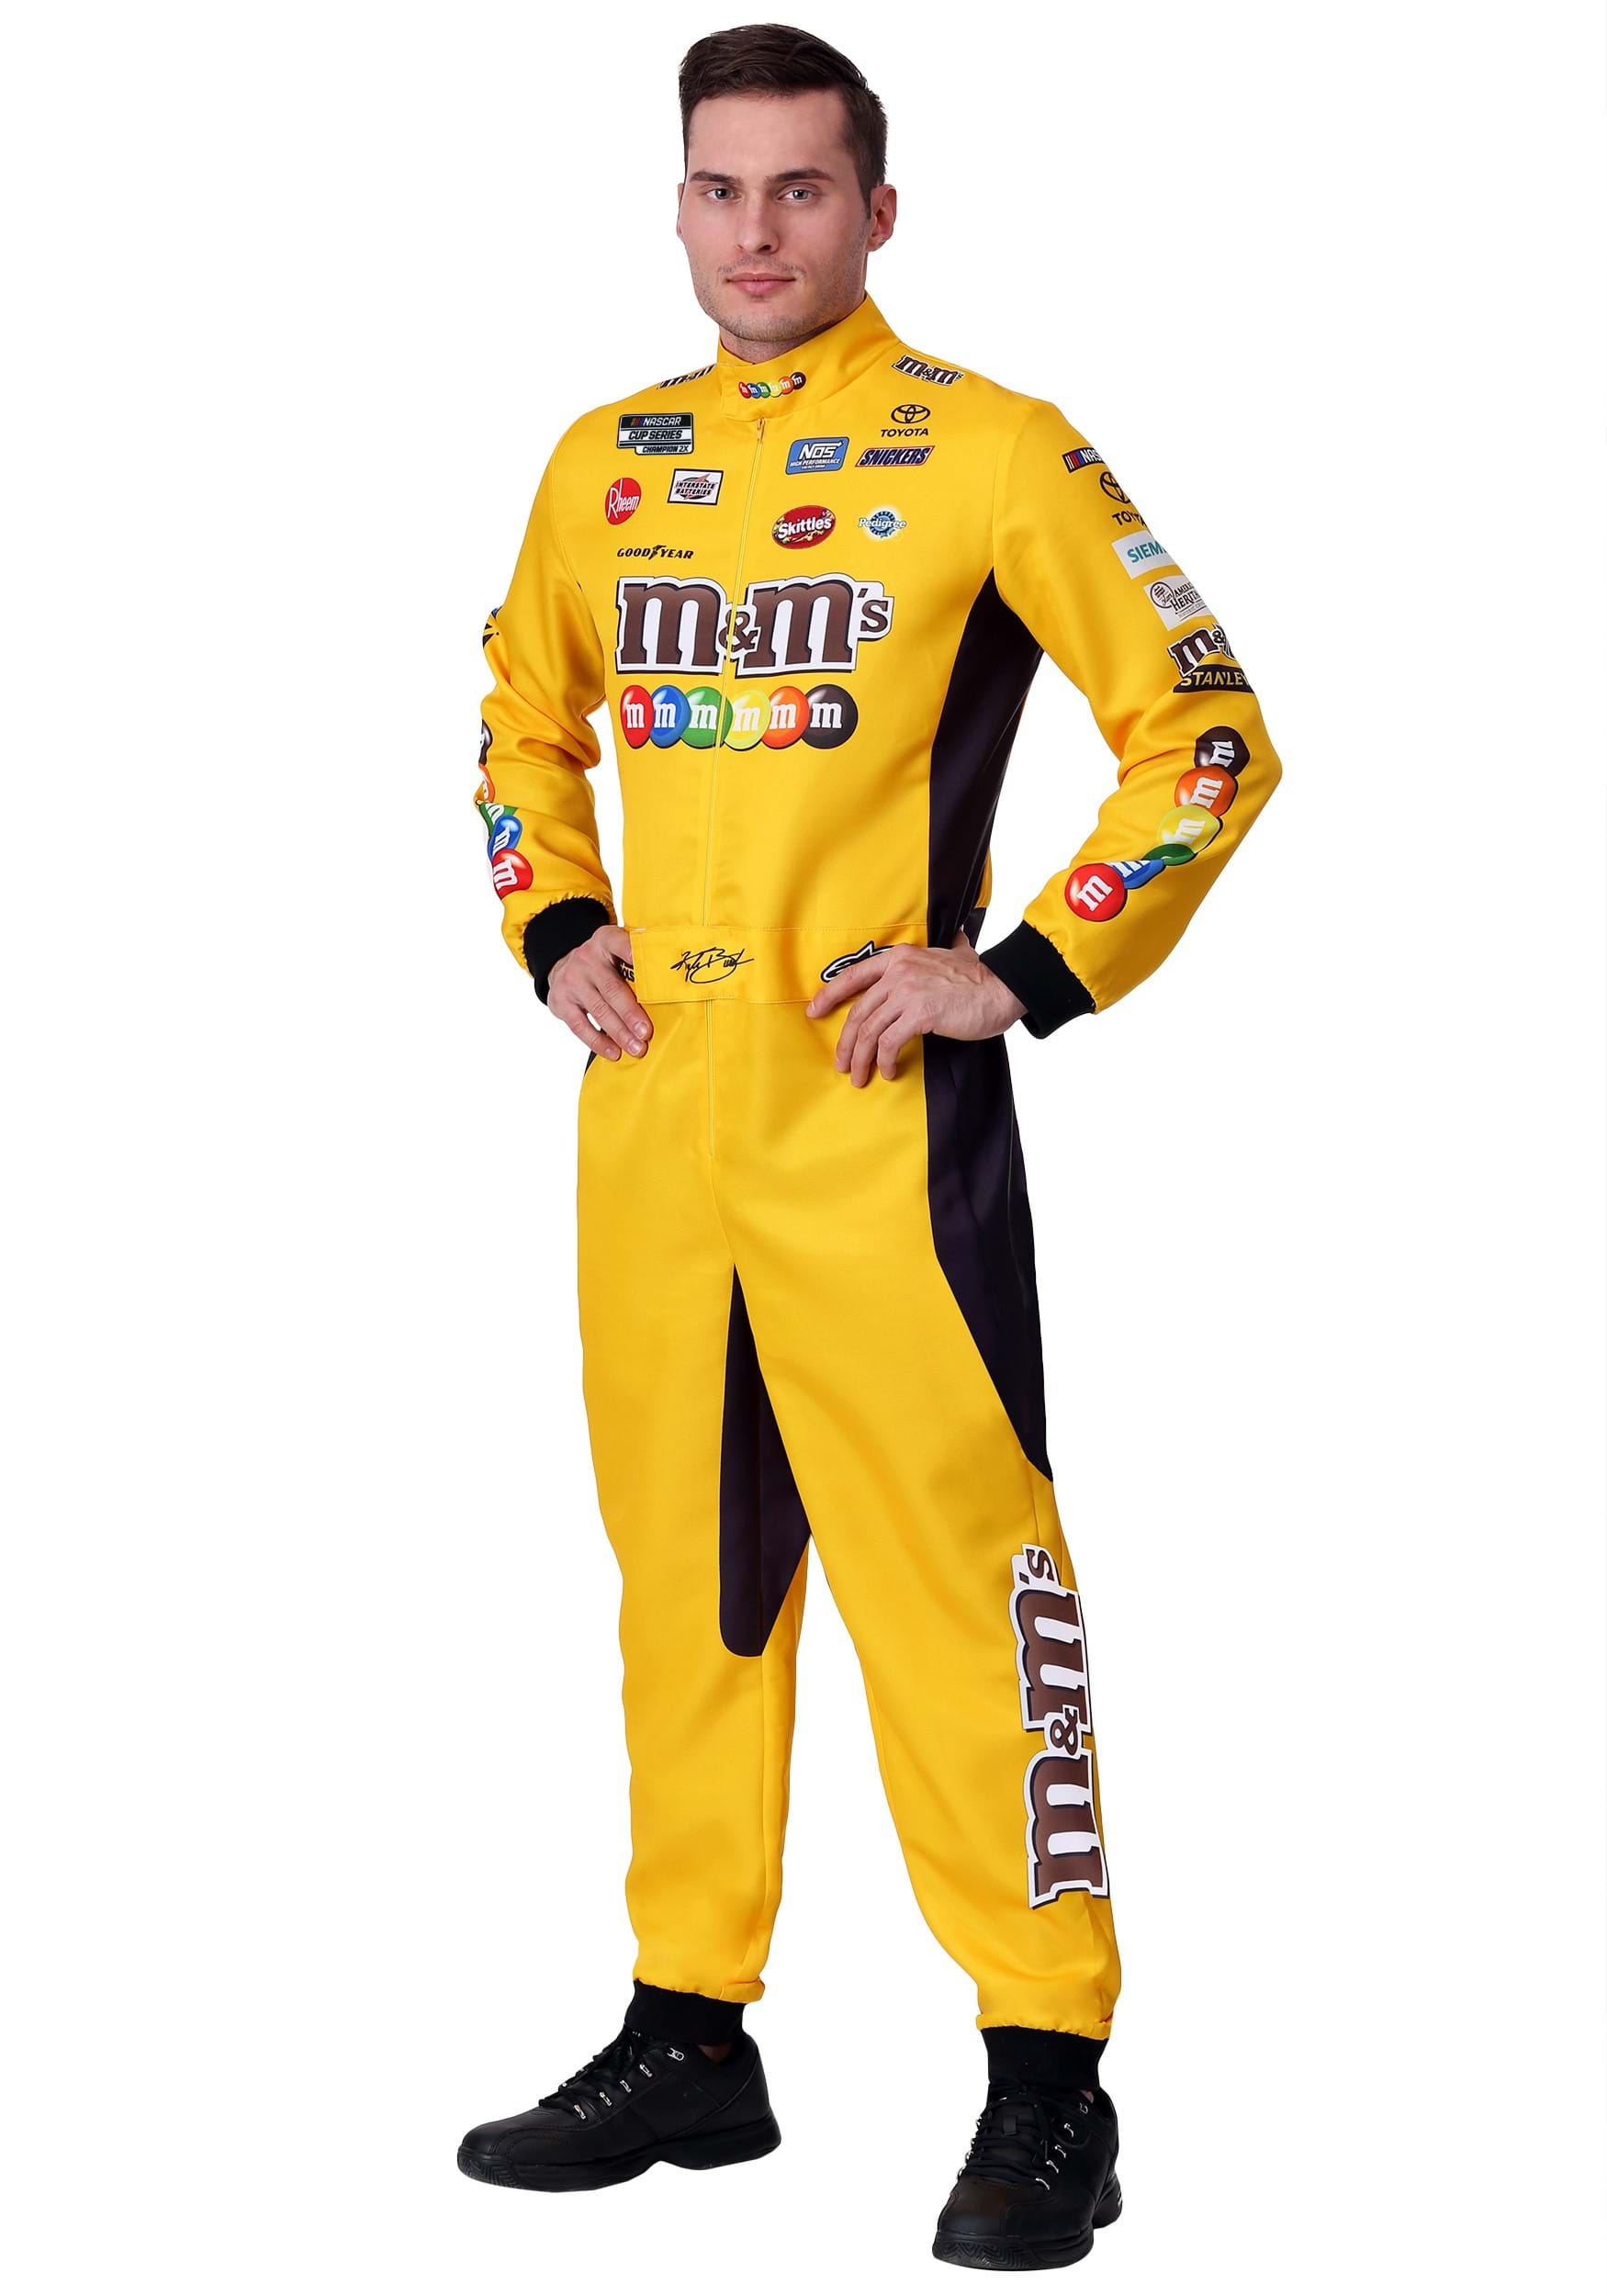 Kyle Busch Uniform Costume from NASCAR